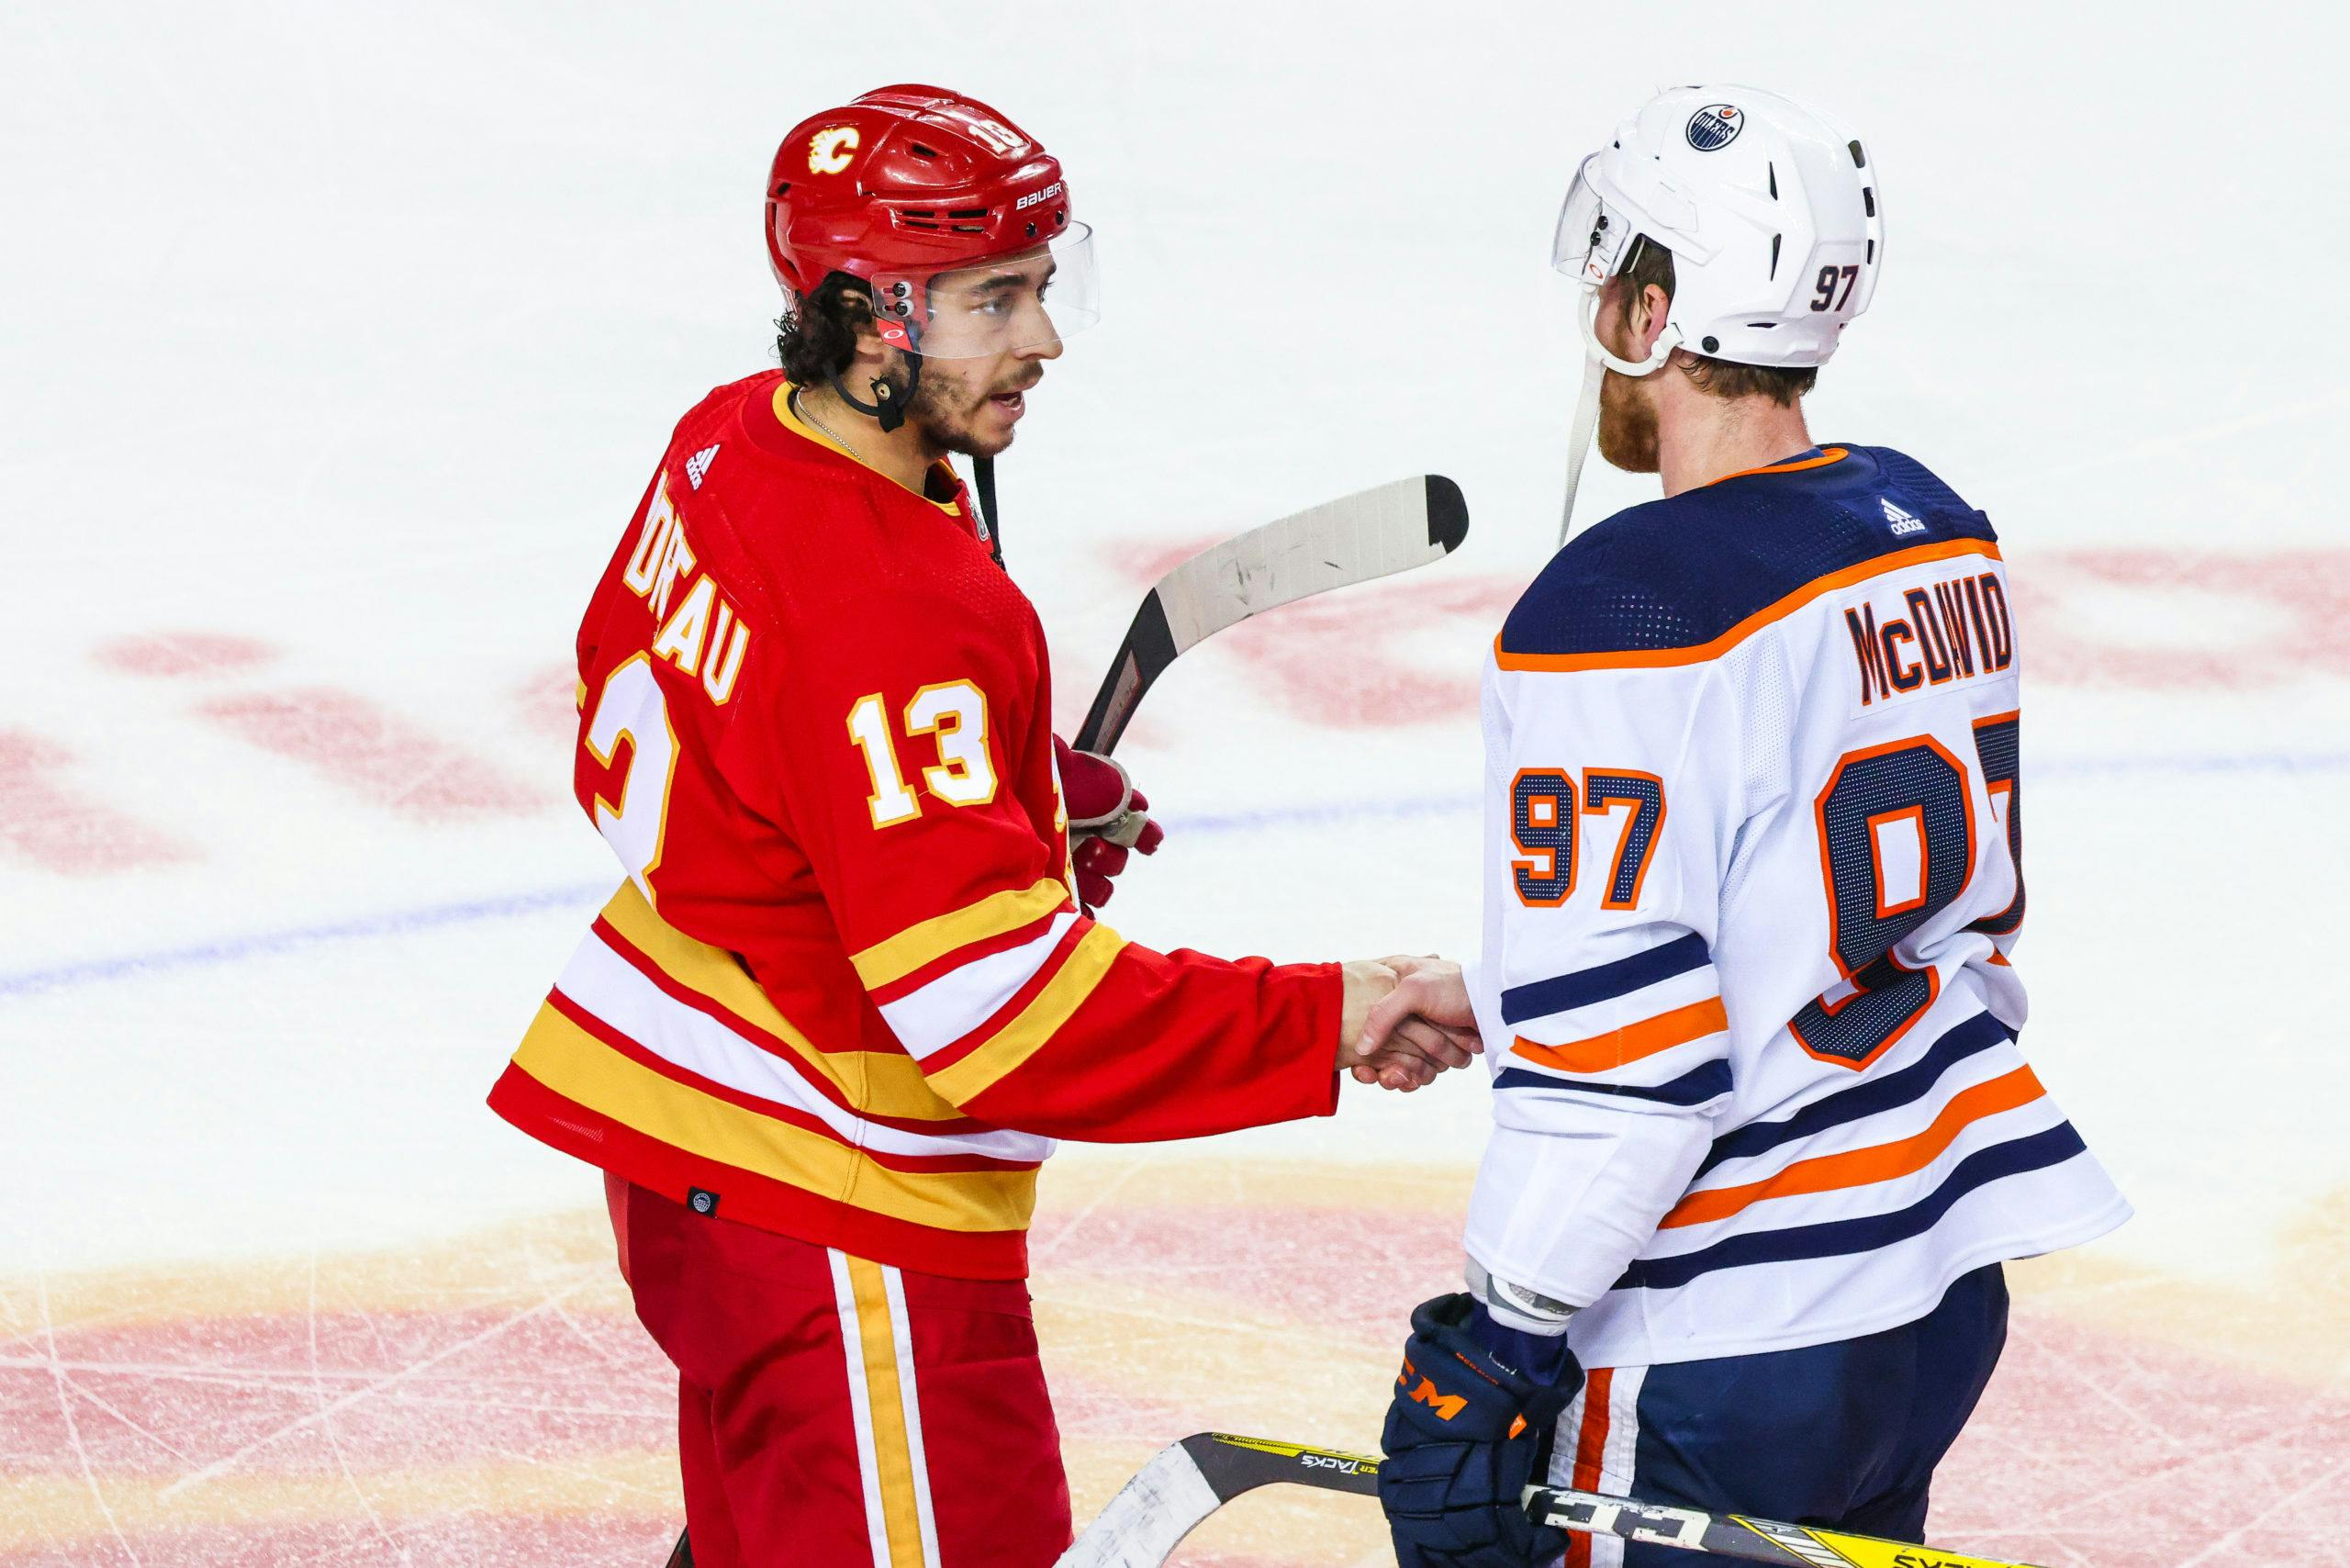 Report: Flames, Oilers to meet in Heritage Classic next season